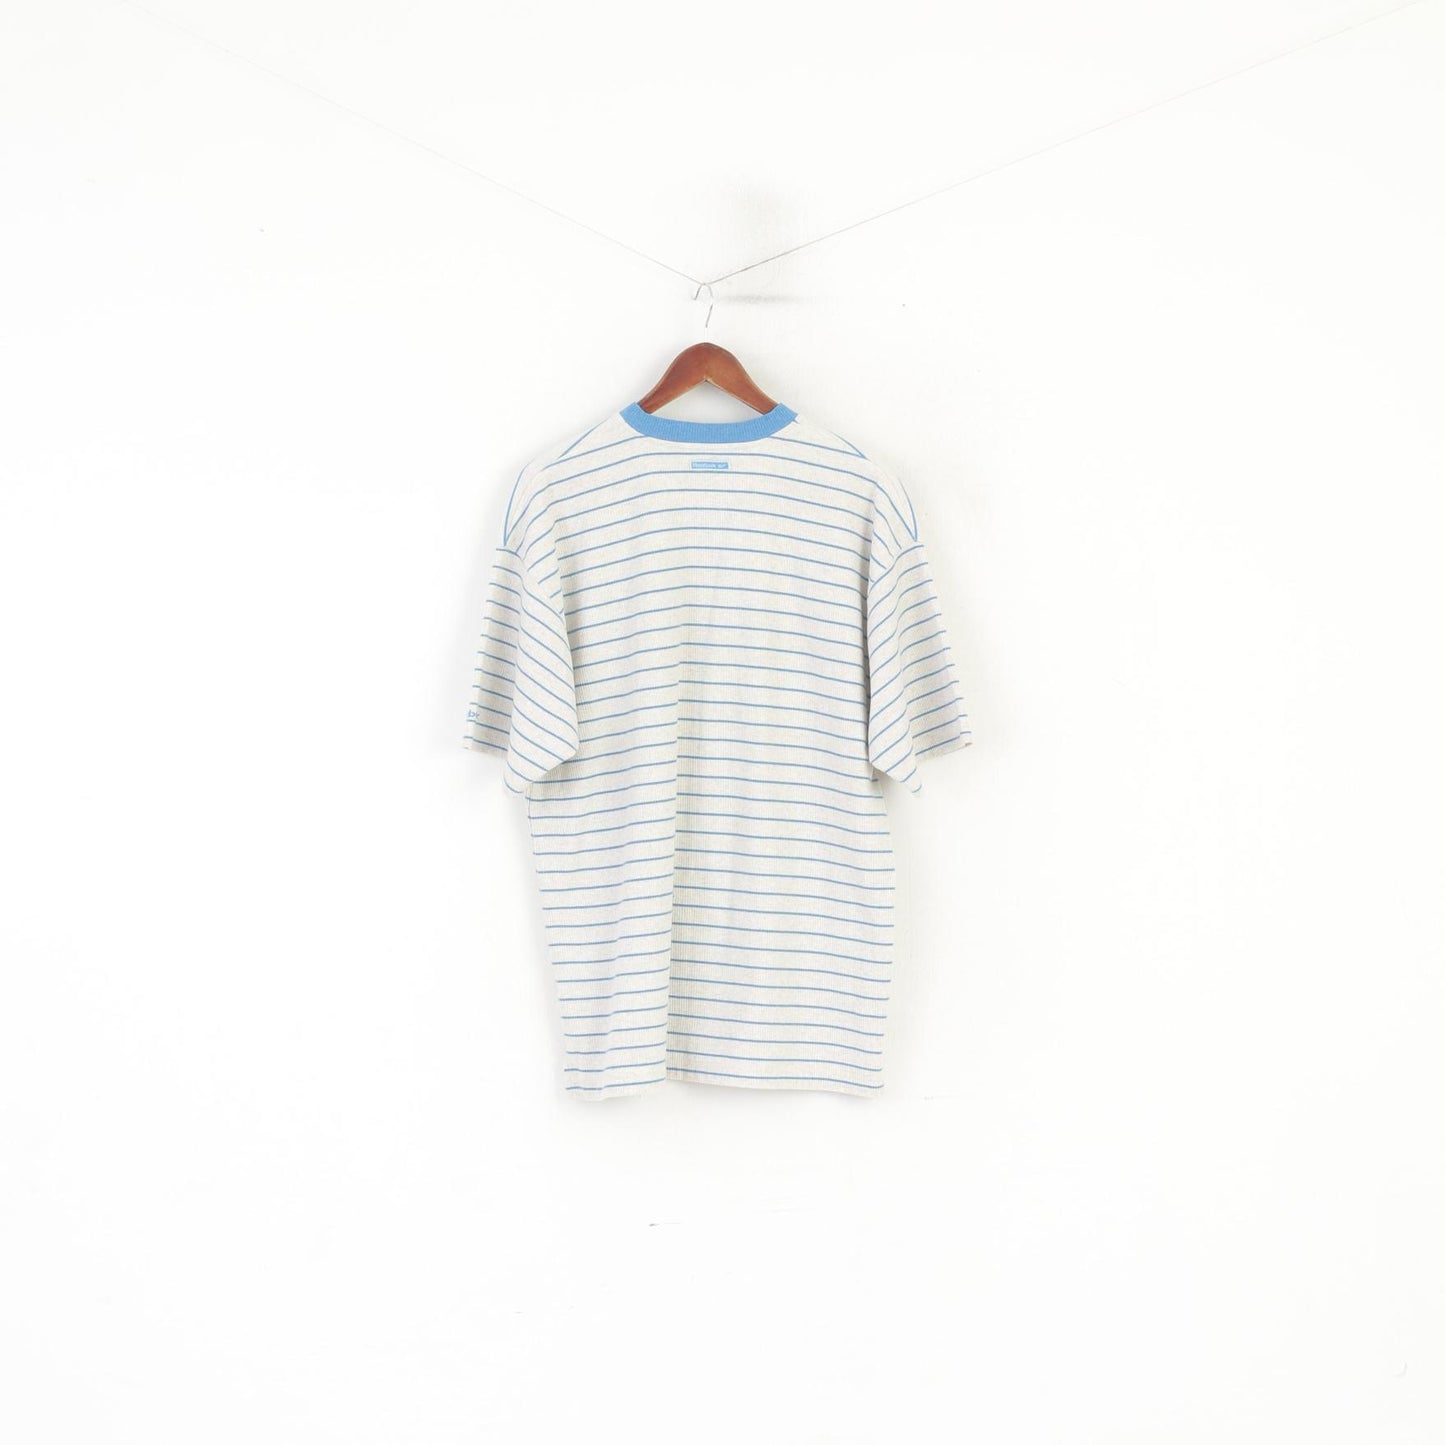 Reebok Men M Shirt Beige Blue Striped Vintage Cotton Oversize Oldschool Top